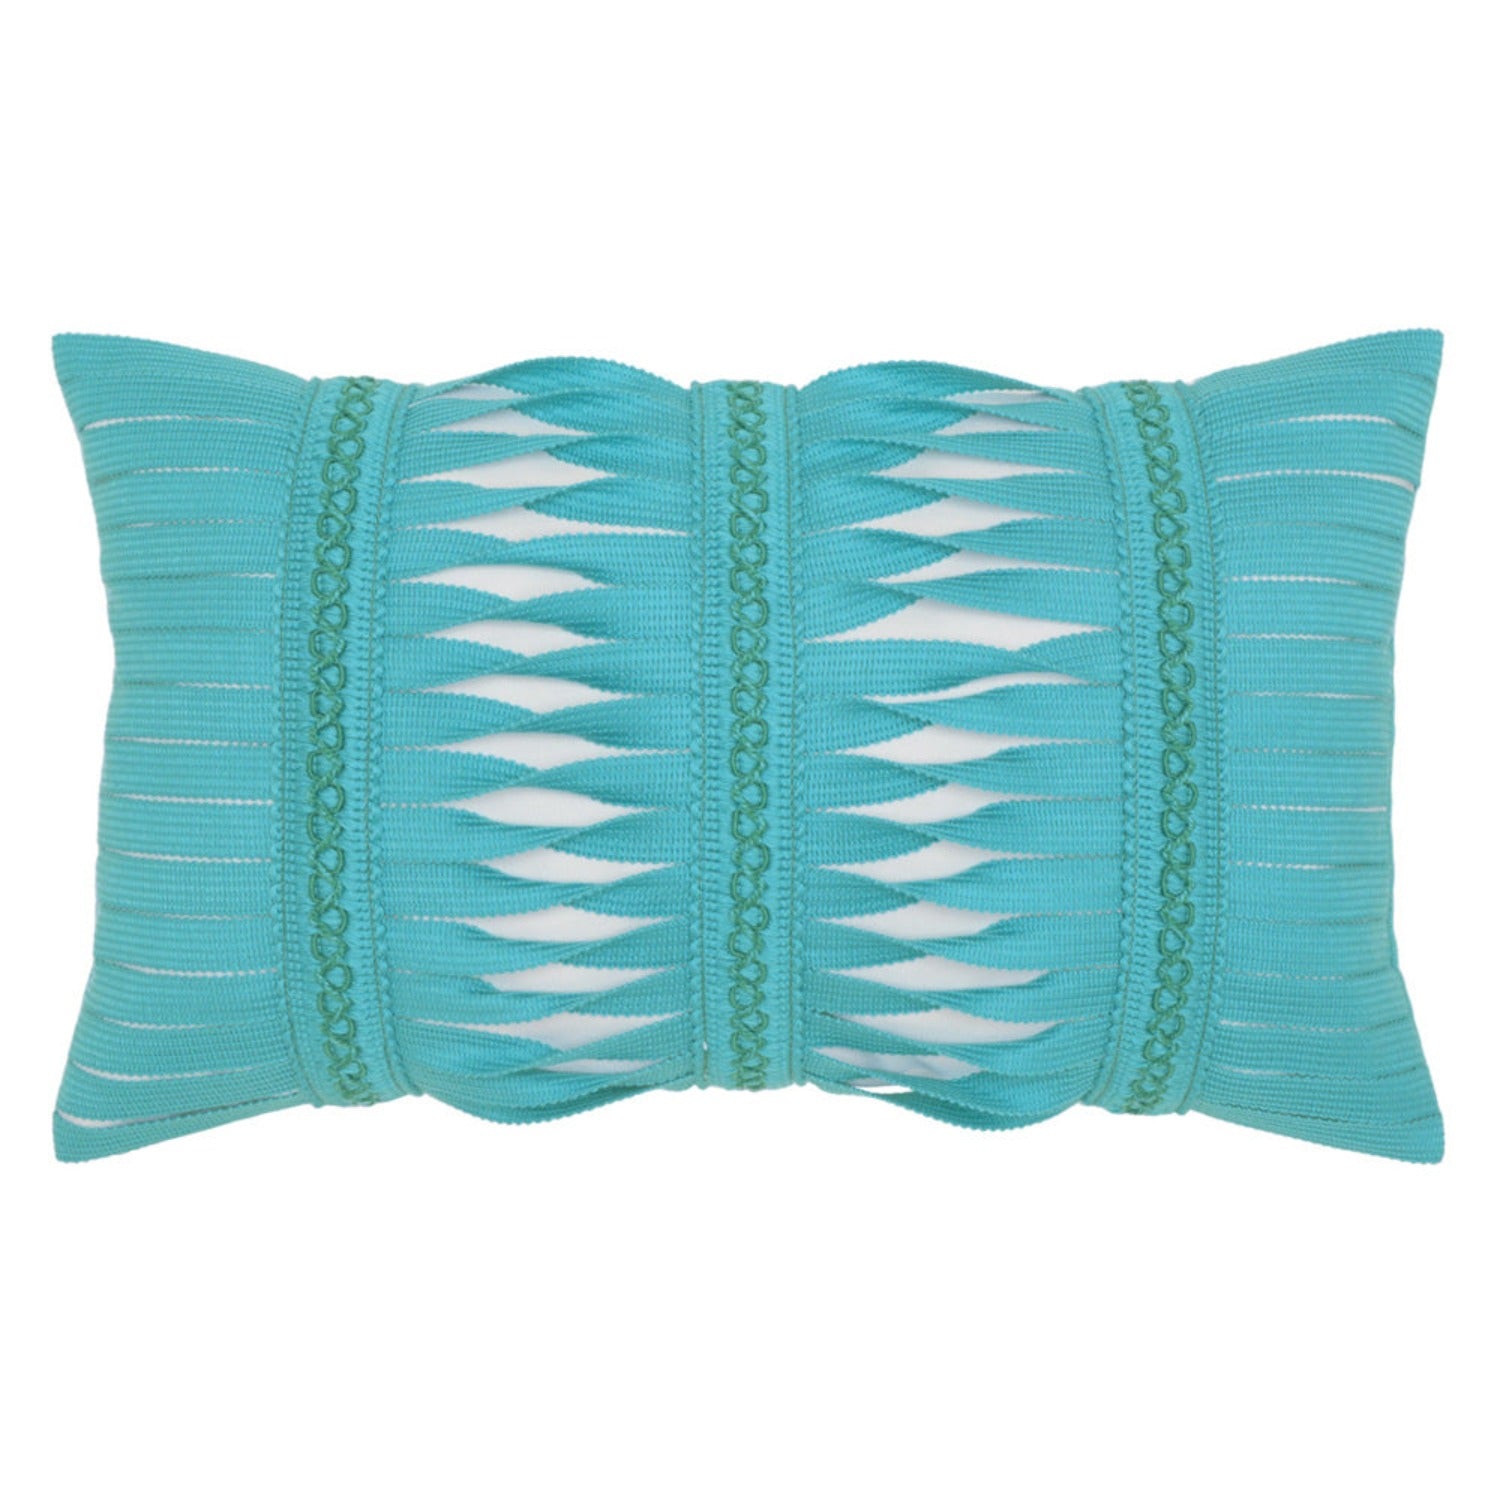 SALE! Elaine Smith 12" x 20" Lumbar Outdoor Pillow - Gladiator Aruba - Polyester Fiber Fill Throw Pillows 12031001